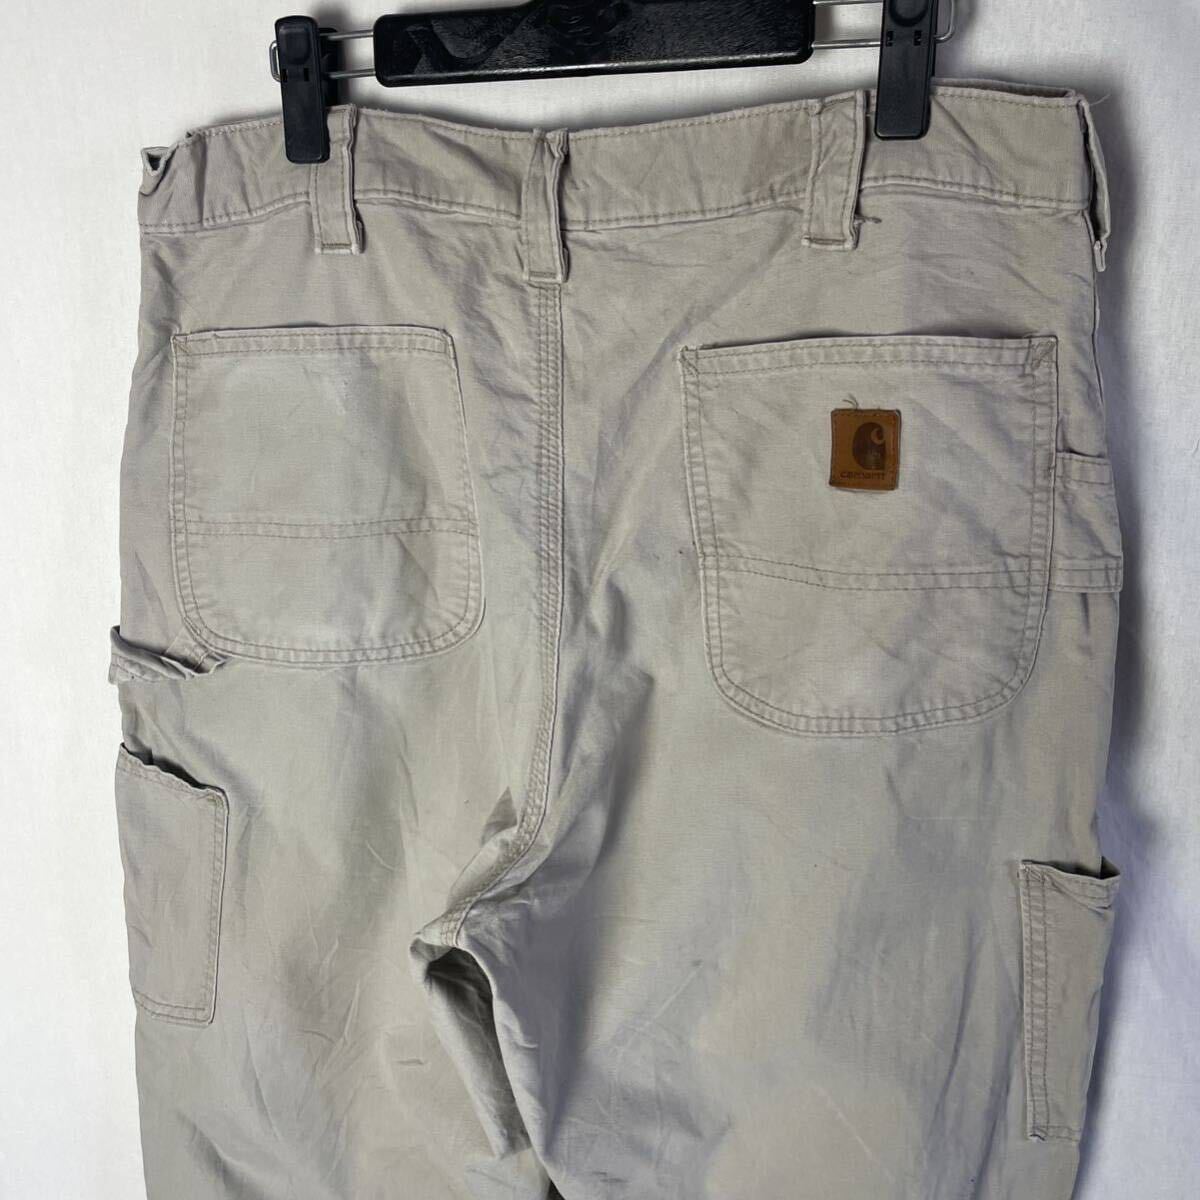  Carhartt painter's pants б/у одежда 34 дюймовый WORKWEAR